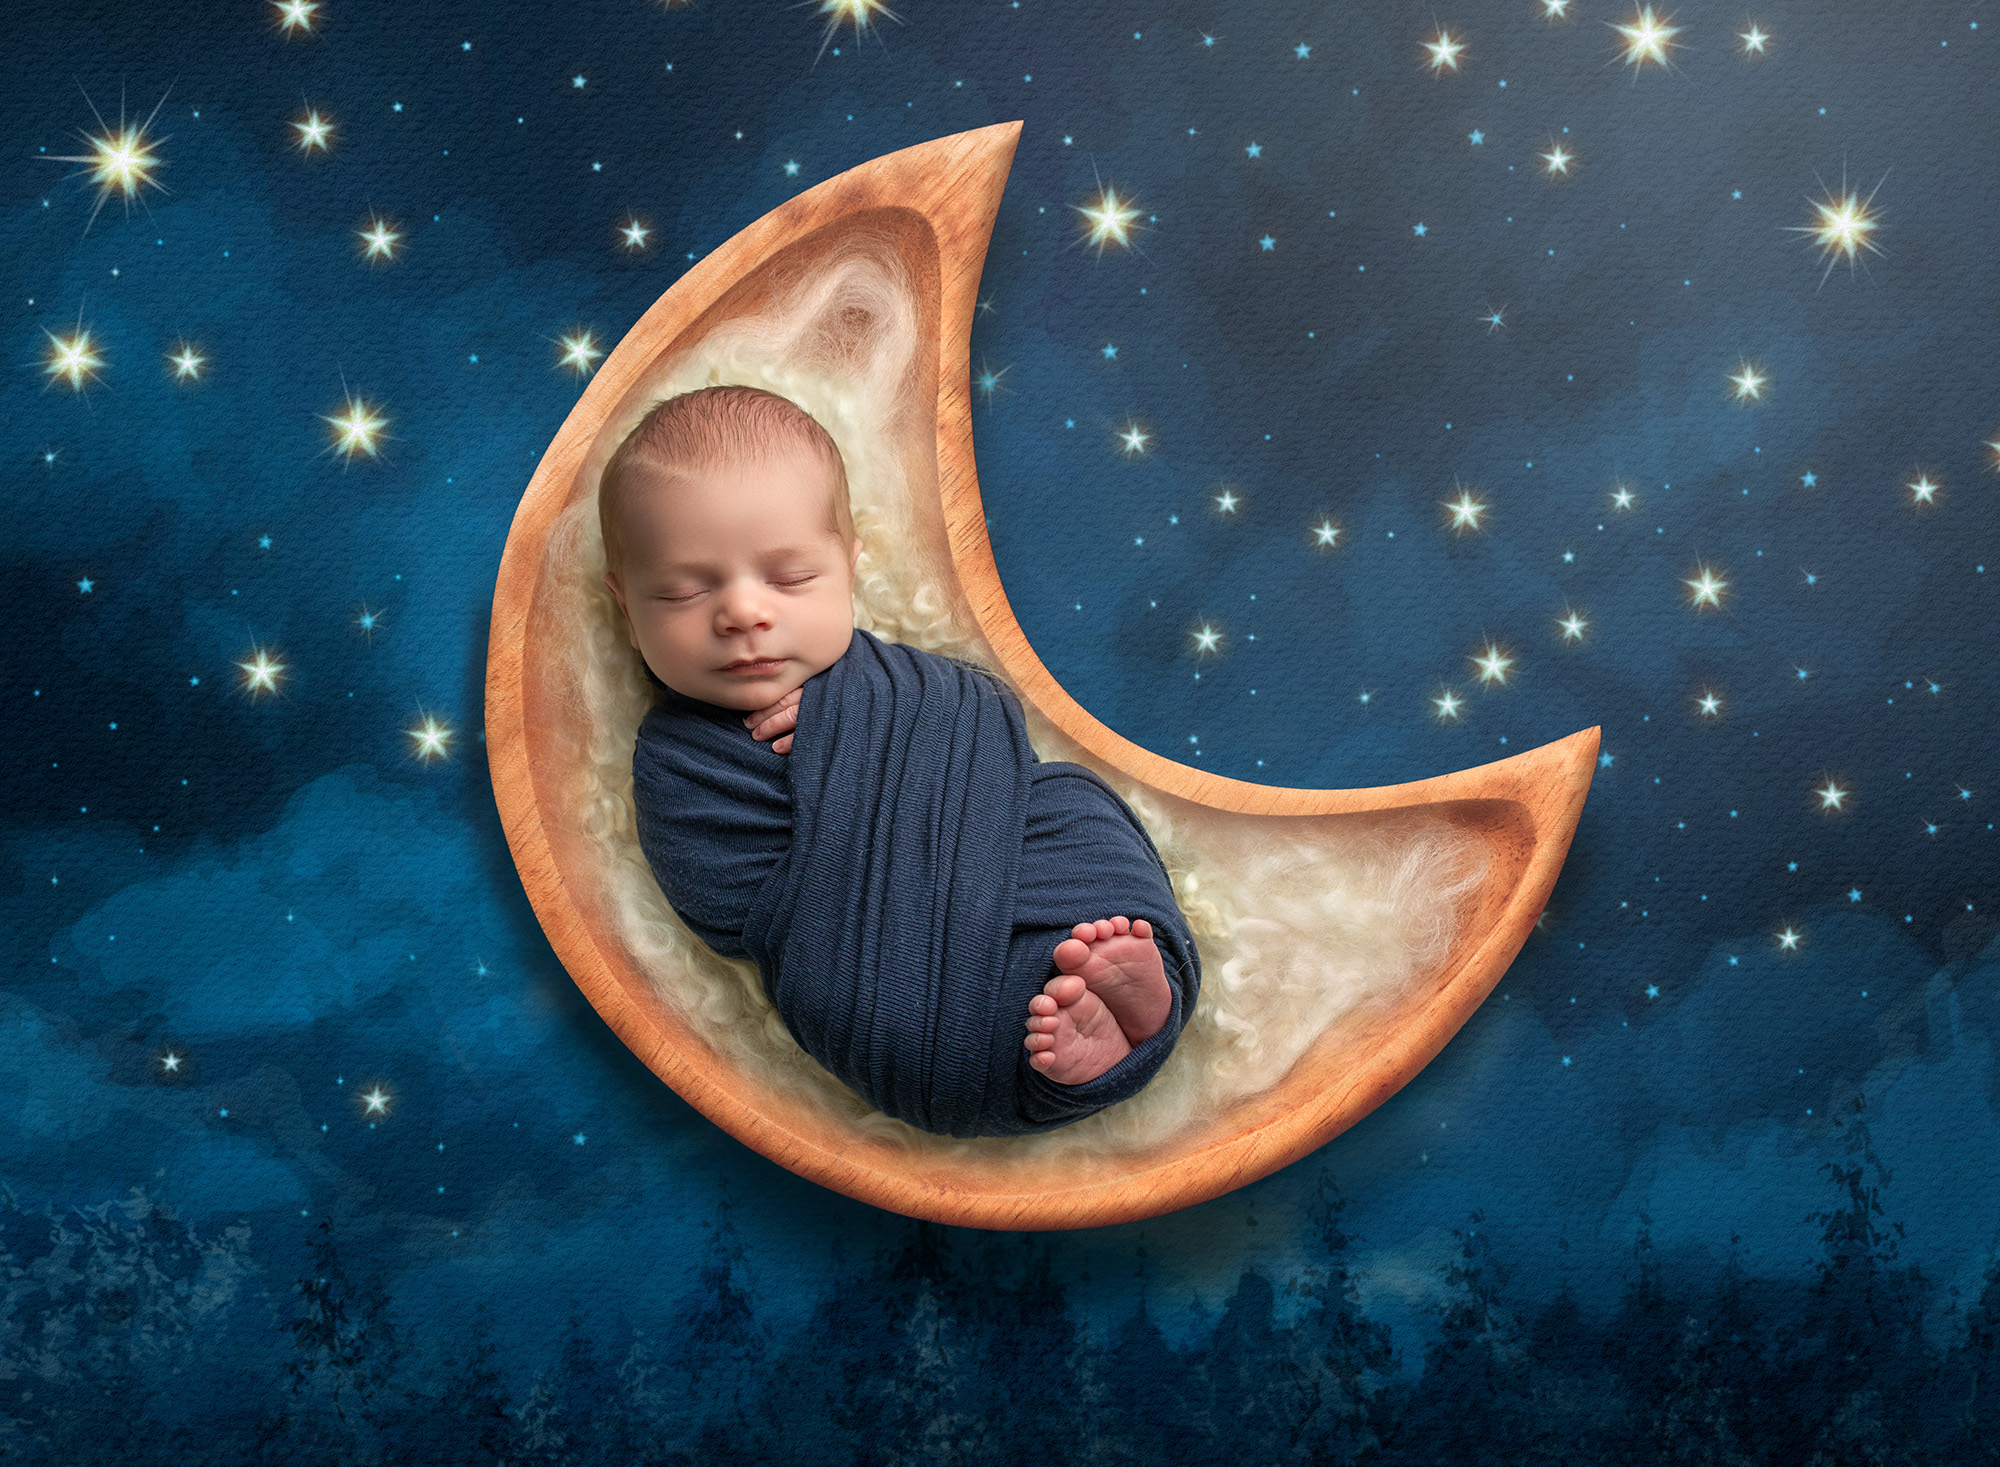 Glastonbury newborn photographer newborn baby boy asleep in crescent moon on moonlit background